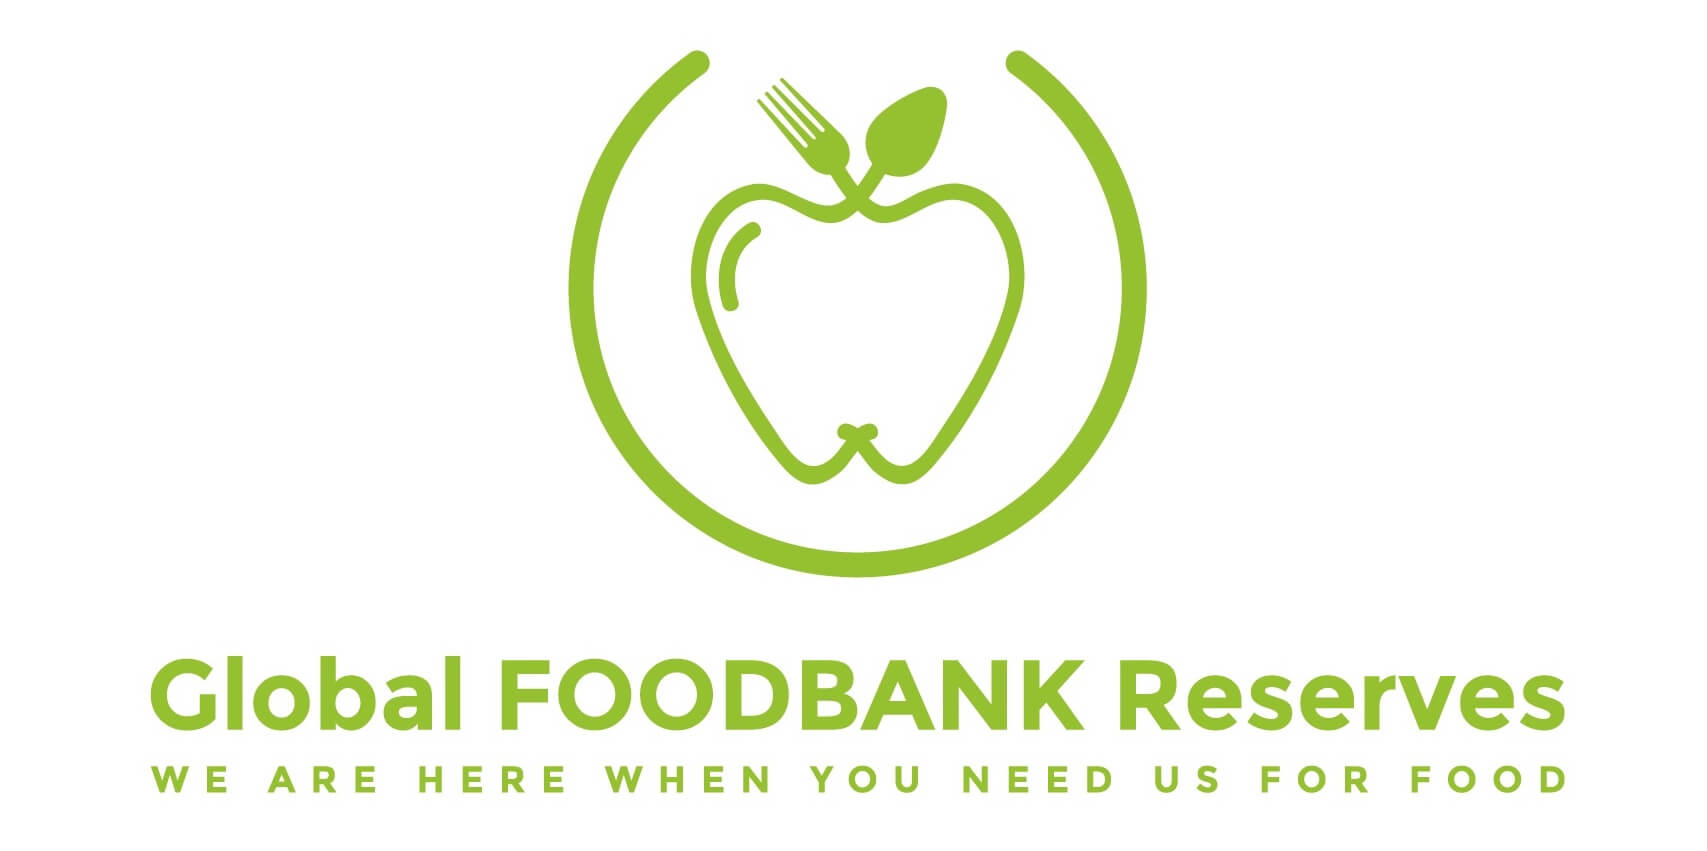 Global FOODBANK Reserves logo image